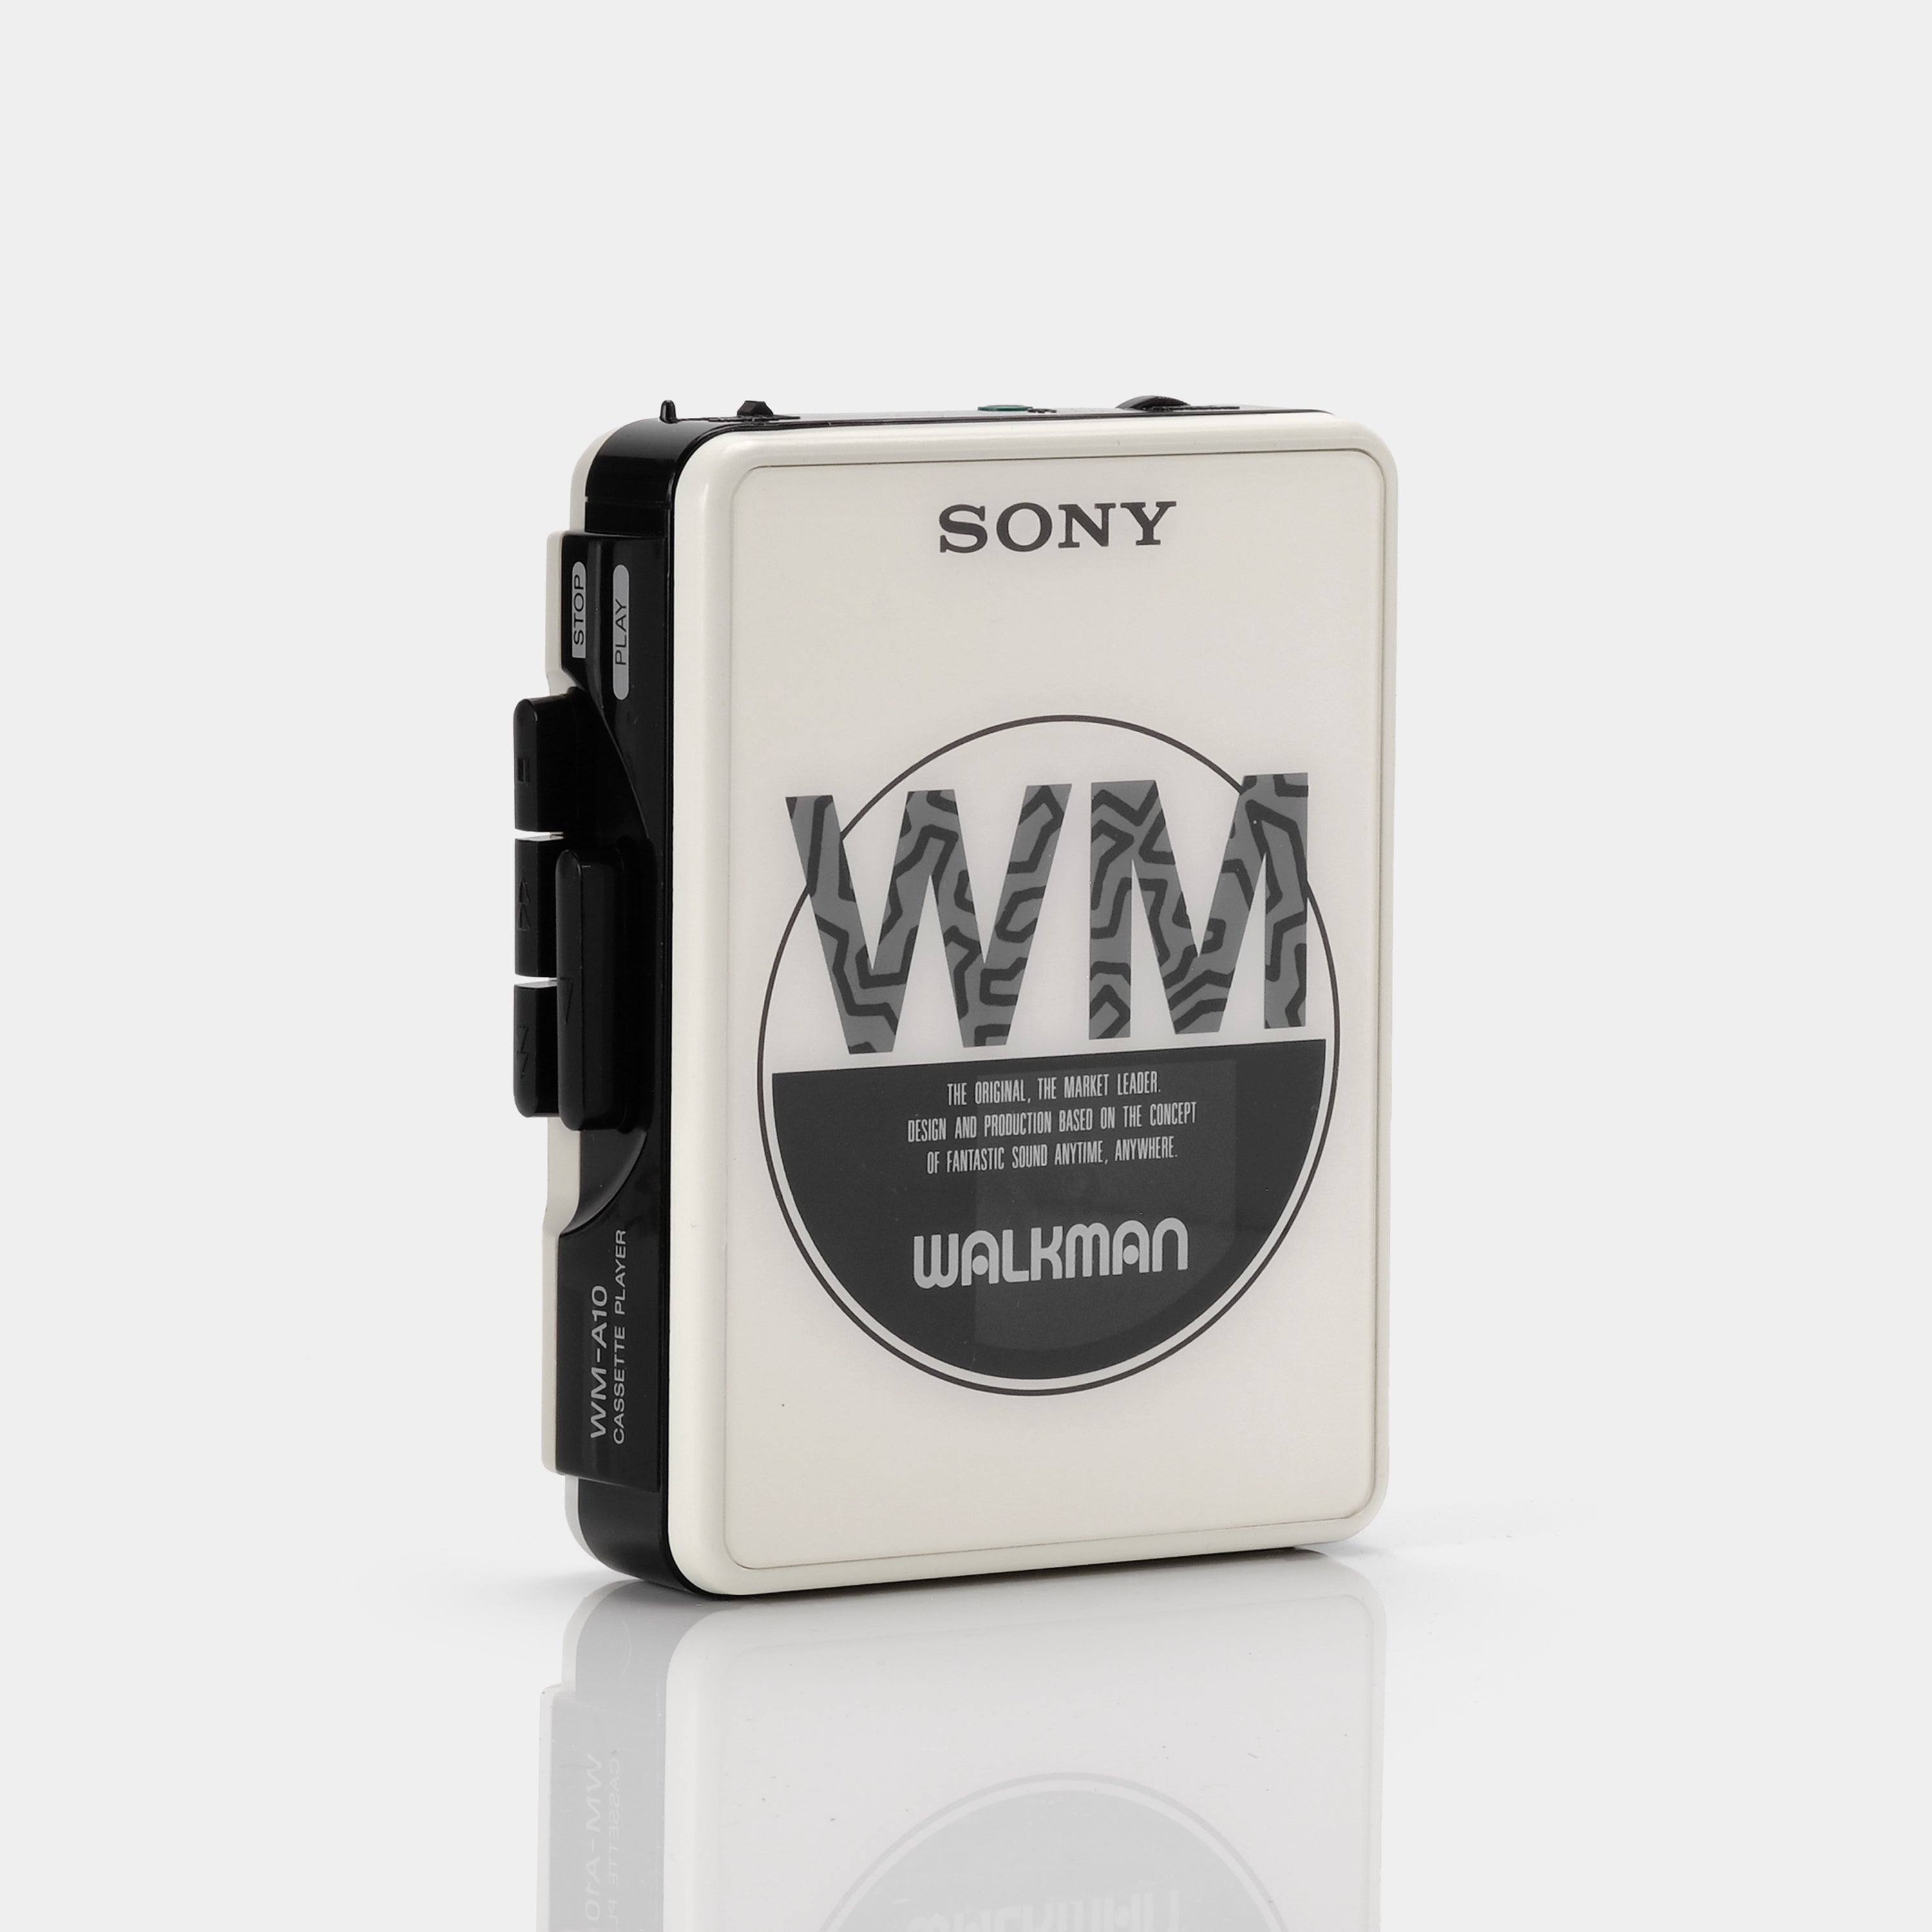 Sony Walkman WM-A10 Portable Cassette Player